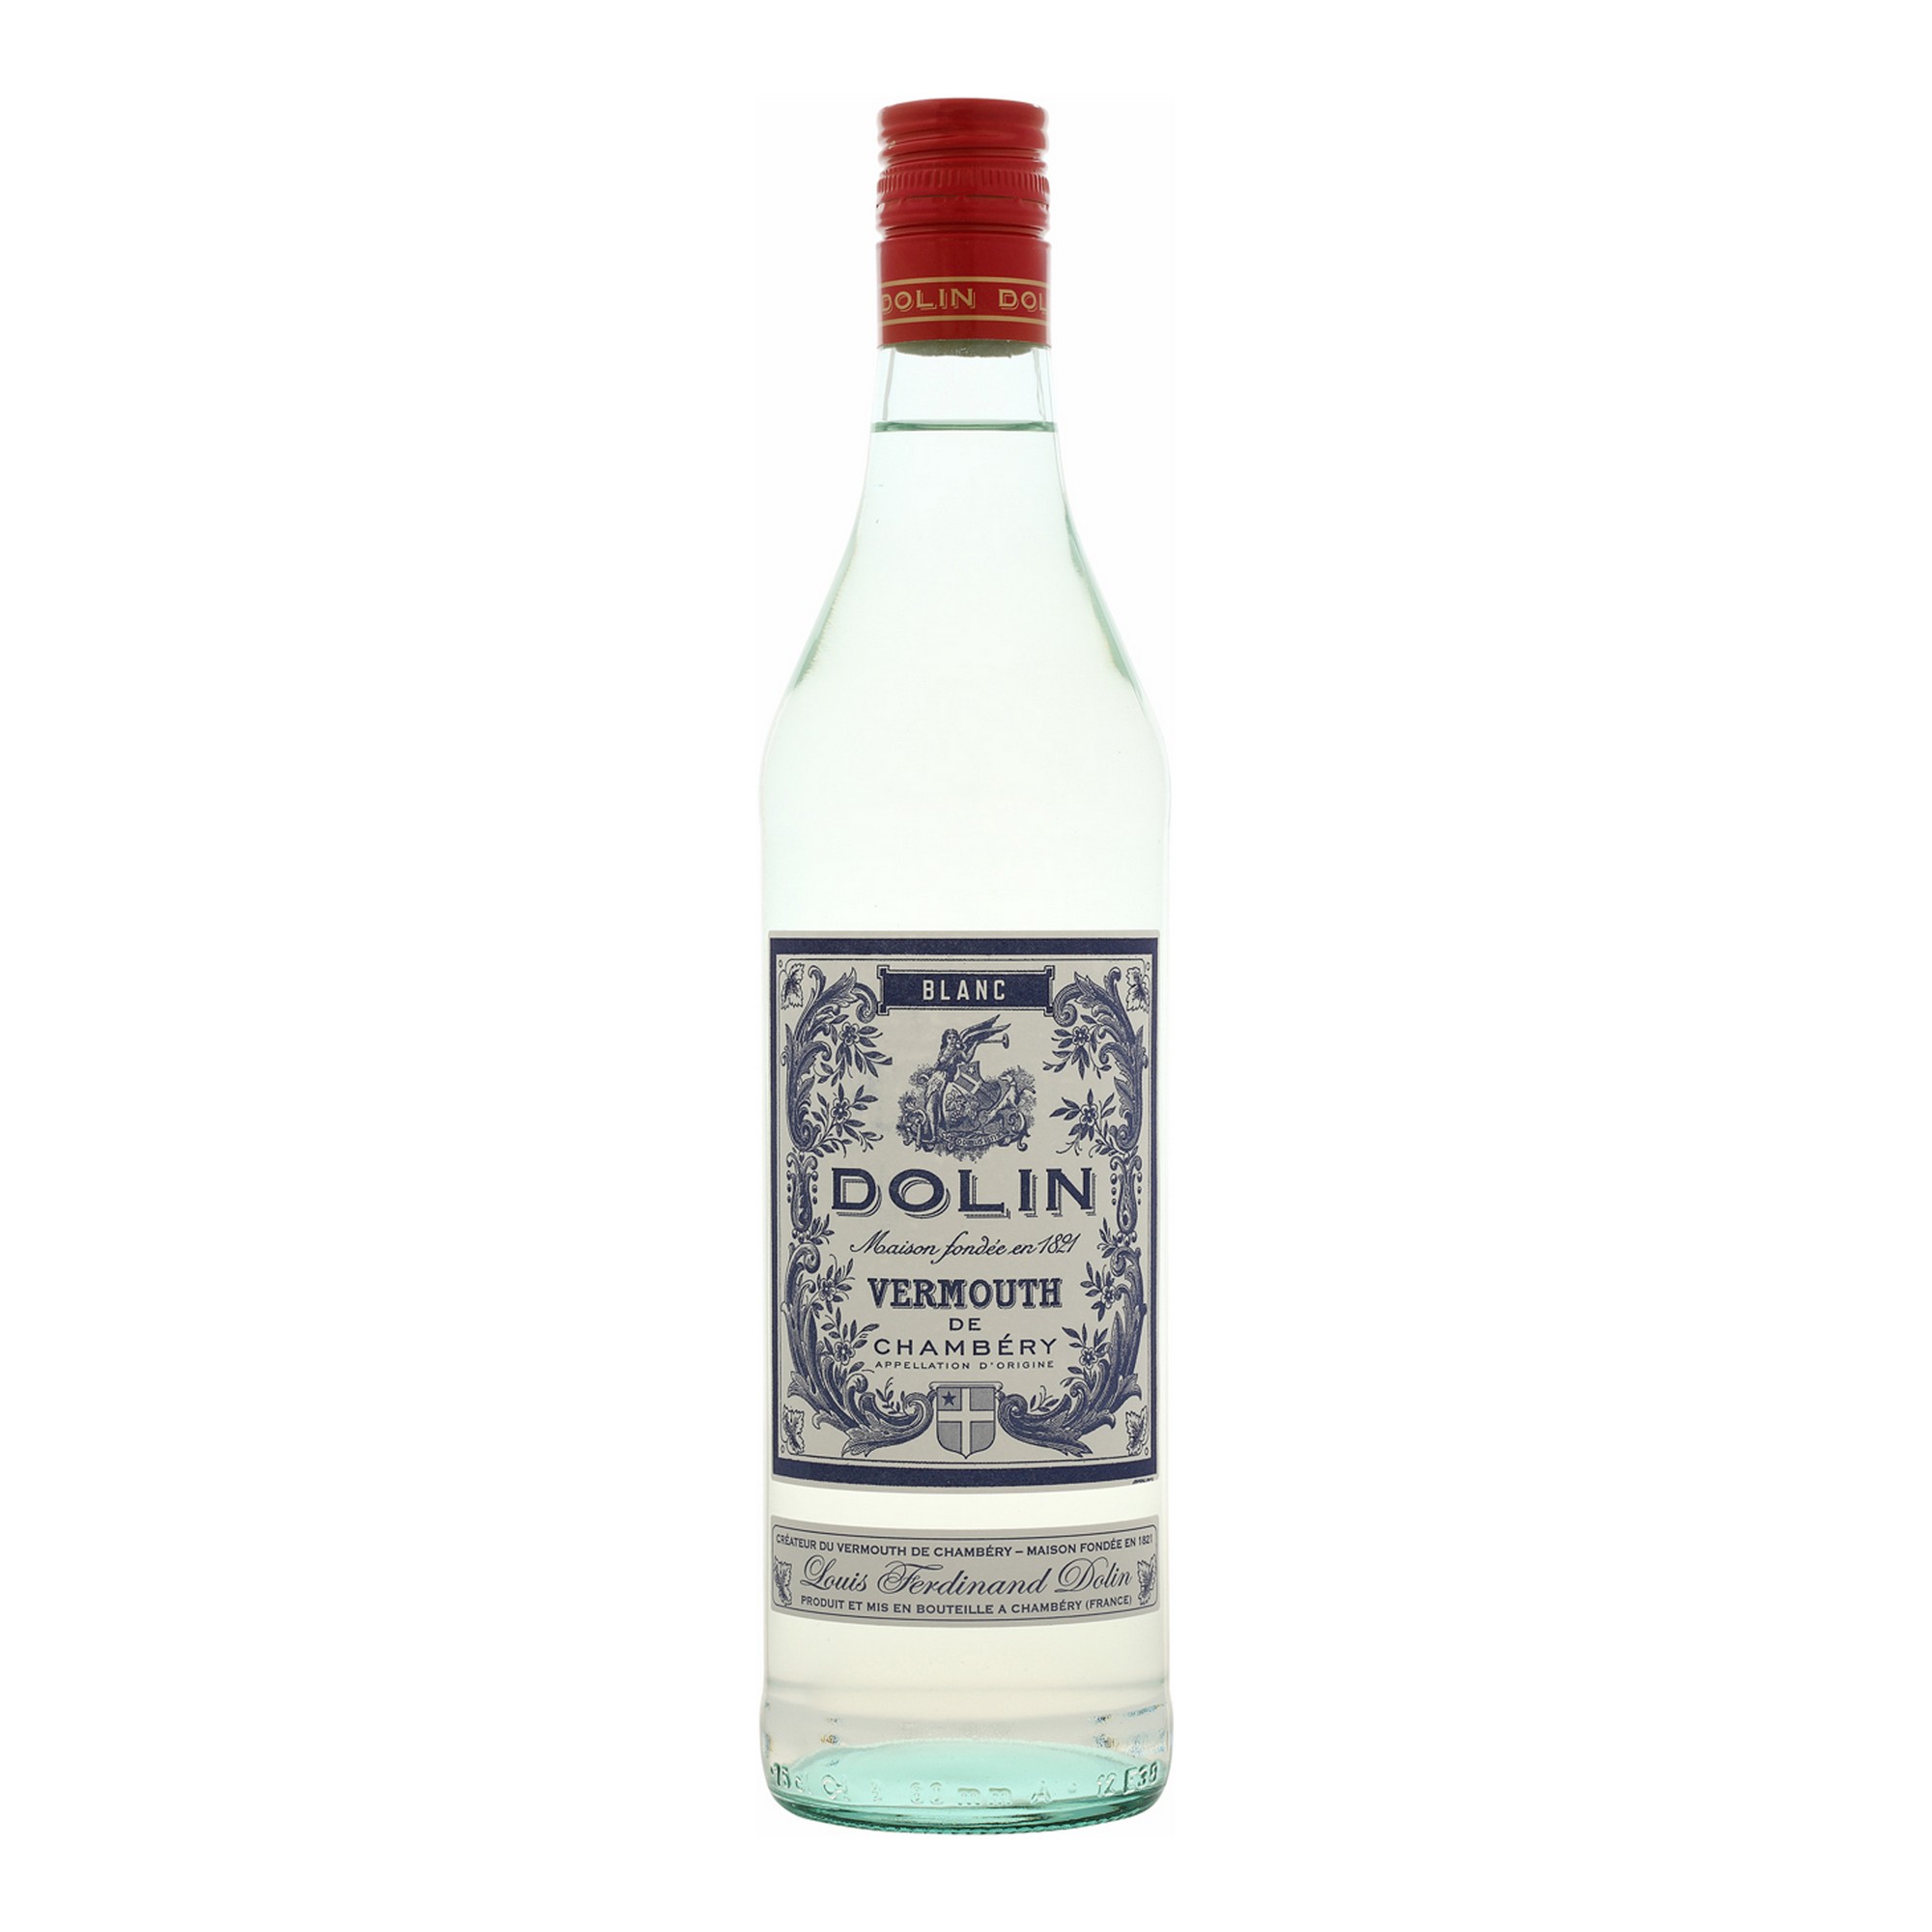 Dolin vermouth de chambéry blanc  13%  75cl